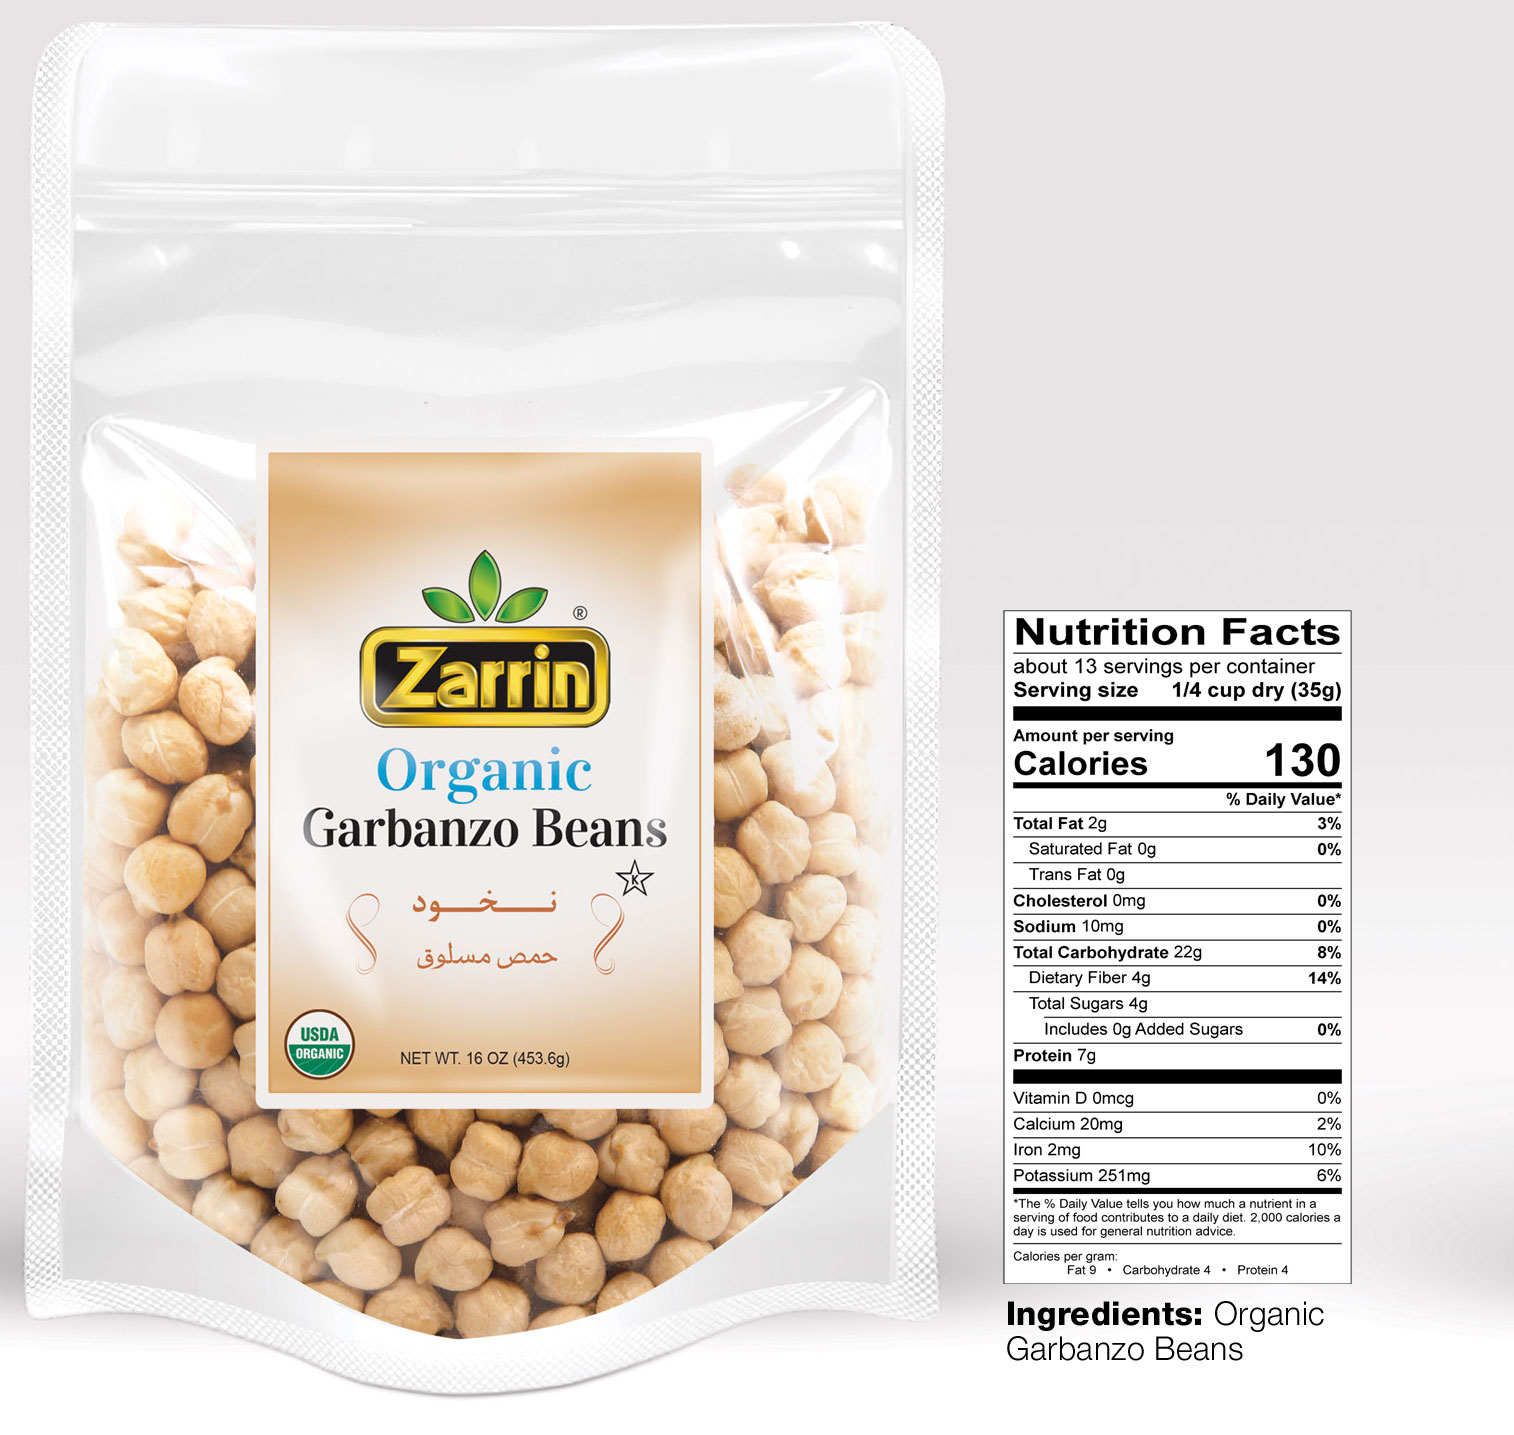 Zarrin Organic Garbanzo Beans 16oz plastic bag.